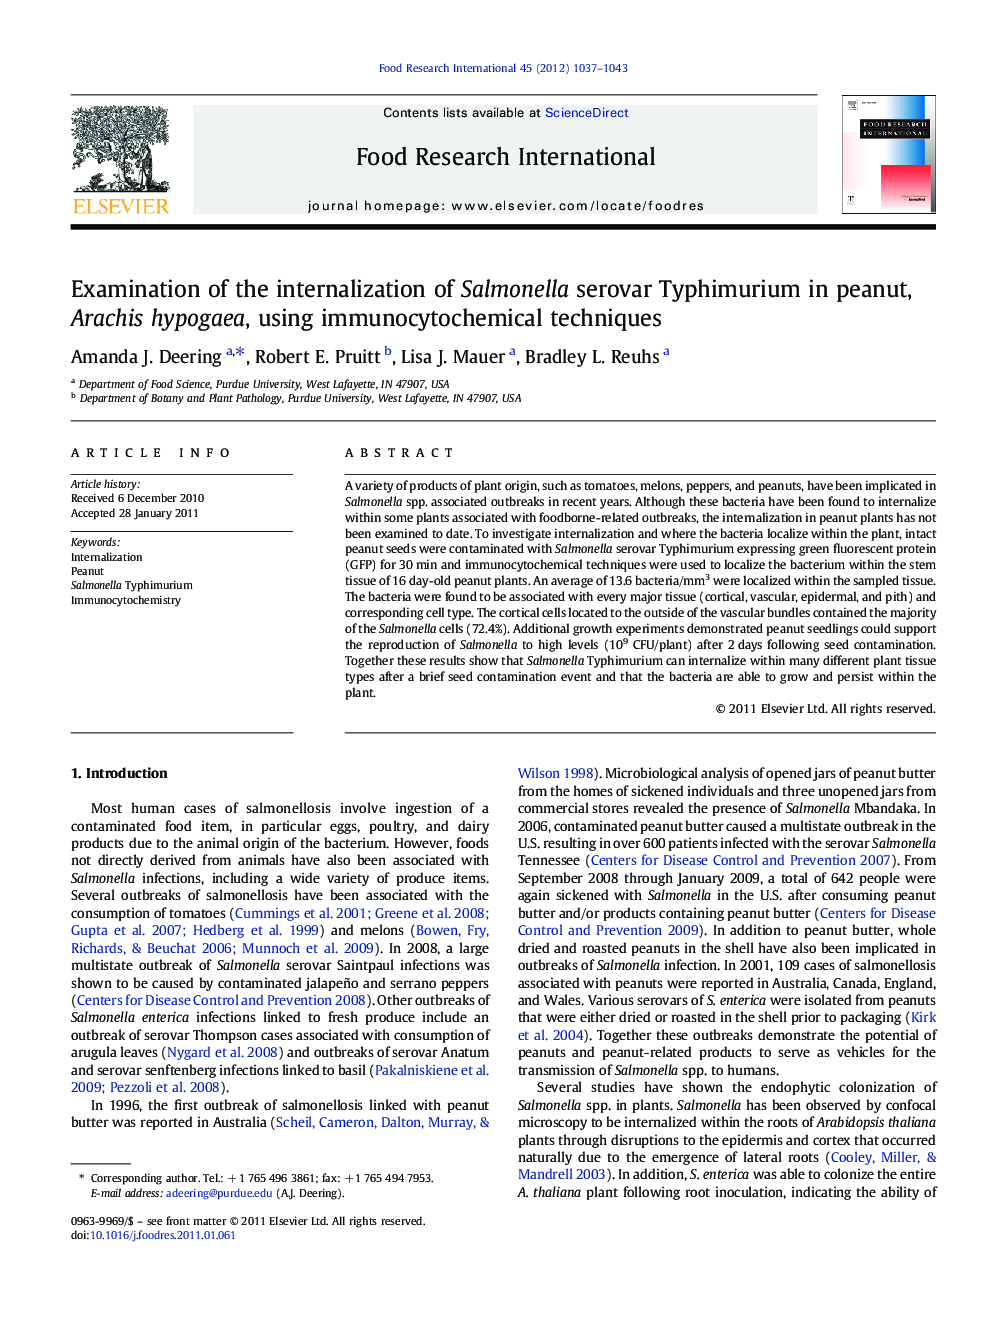 Examination of the internalization of Salmonella serovar Typhimurium in peanut, Arachis hypogaea, using immunocytochemical techniques